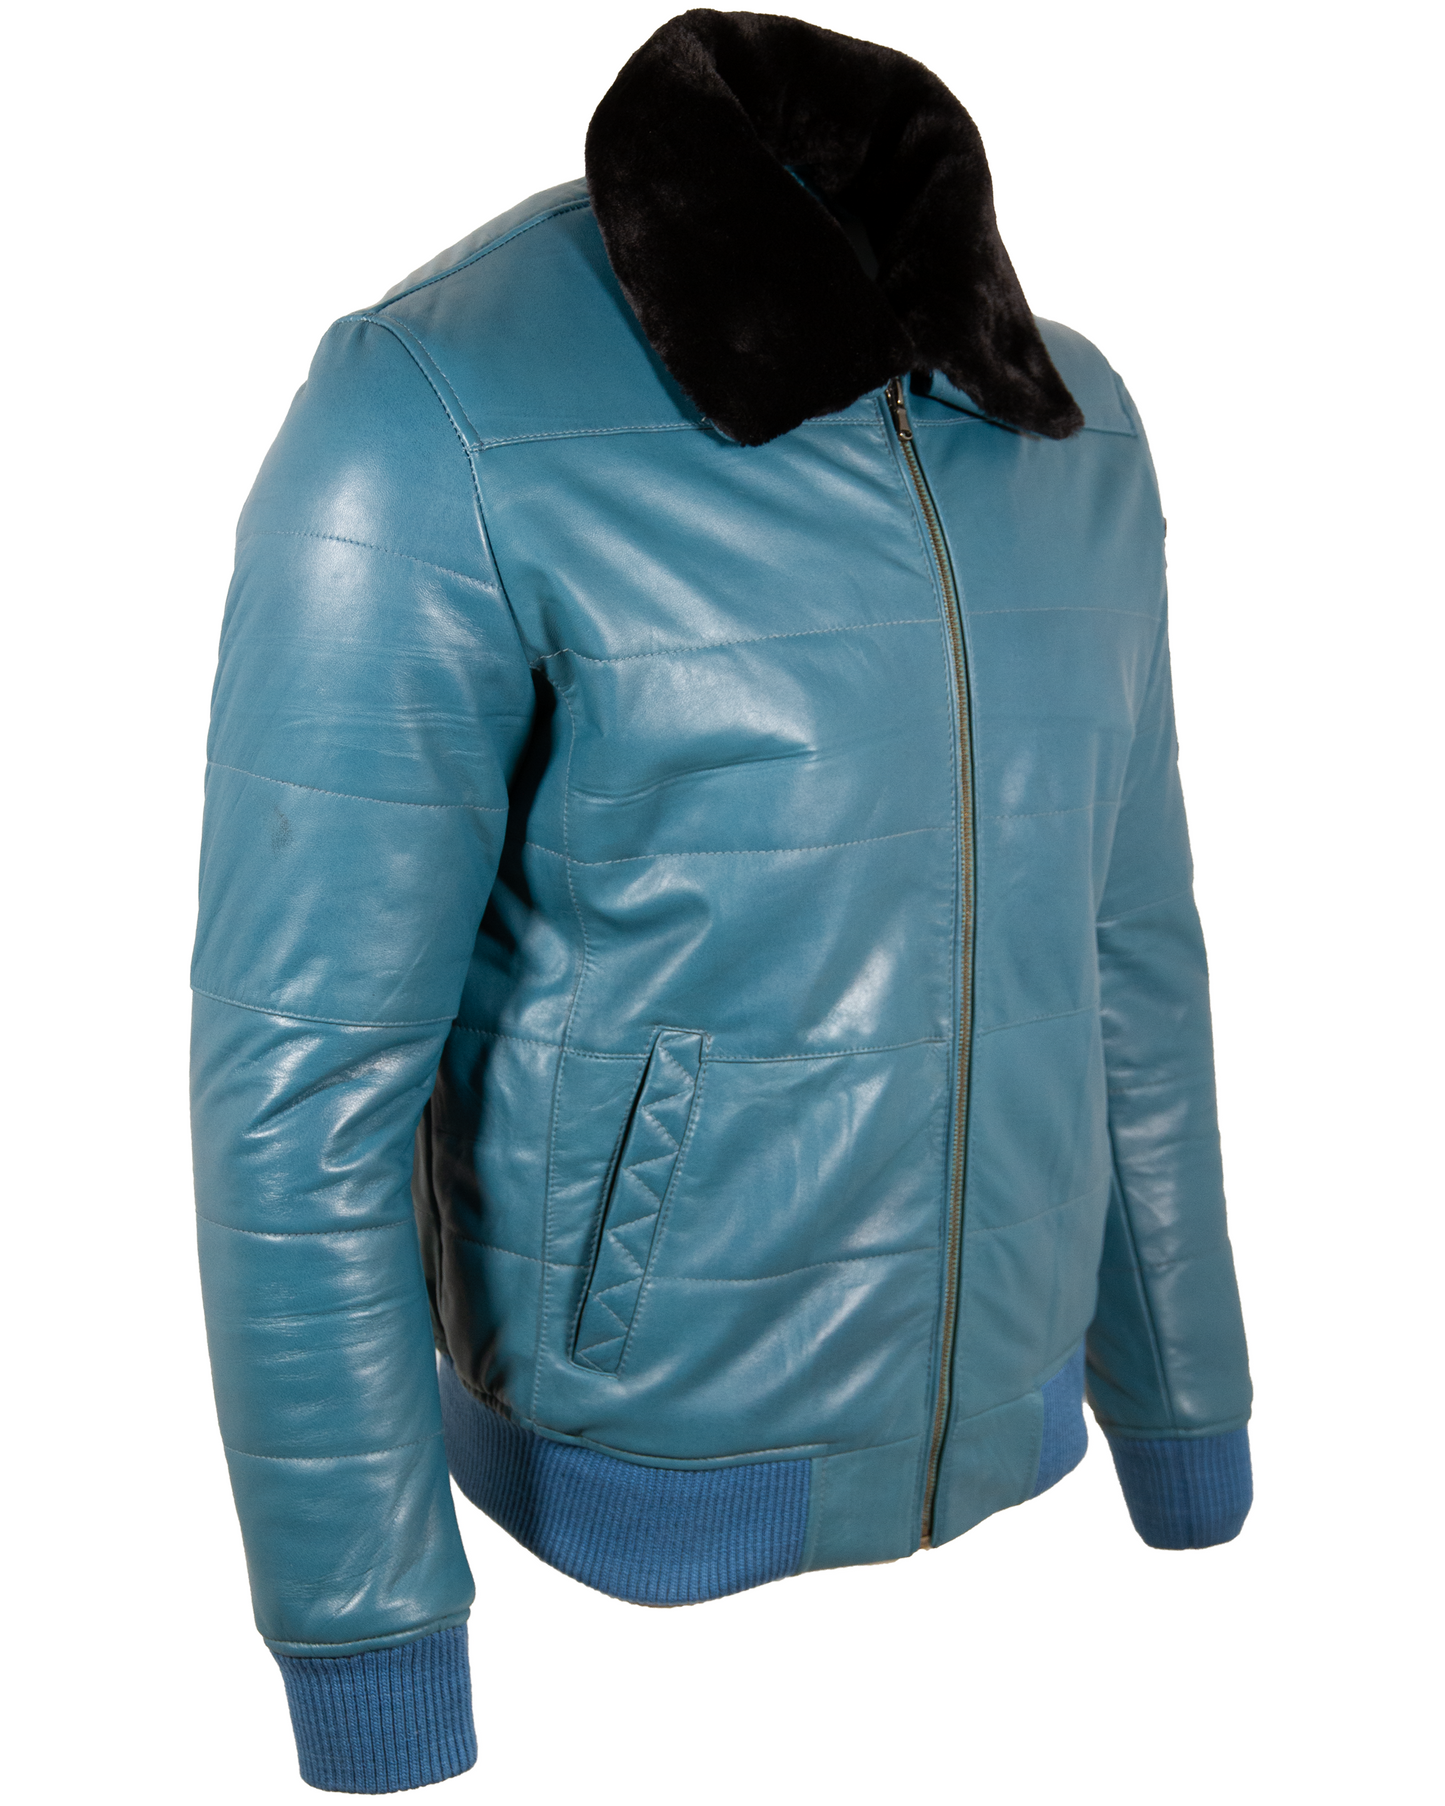 Aviatrix Men's Real Leather Pilot Aviator Fashion Jacket (ZADV) - Denim Blue